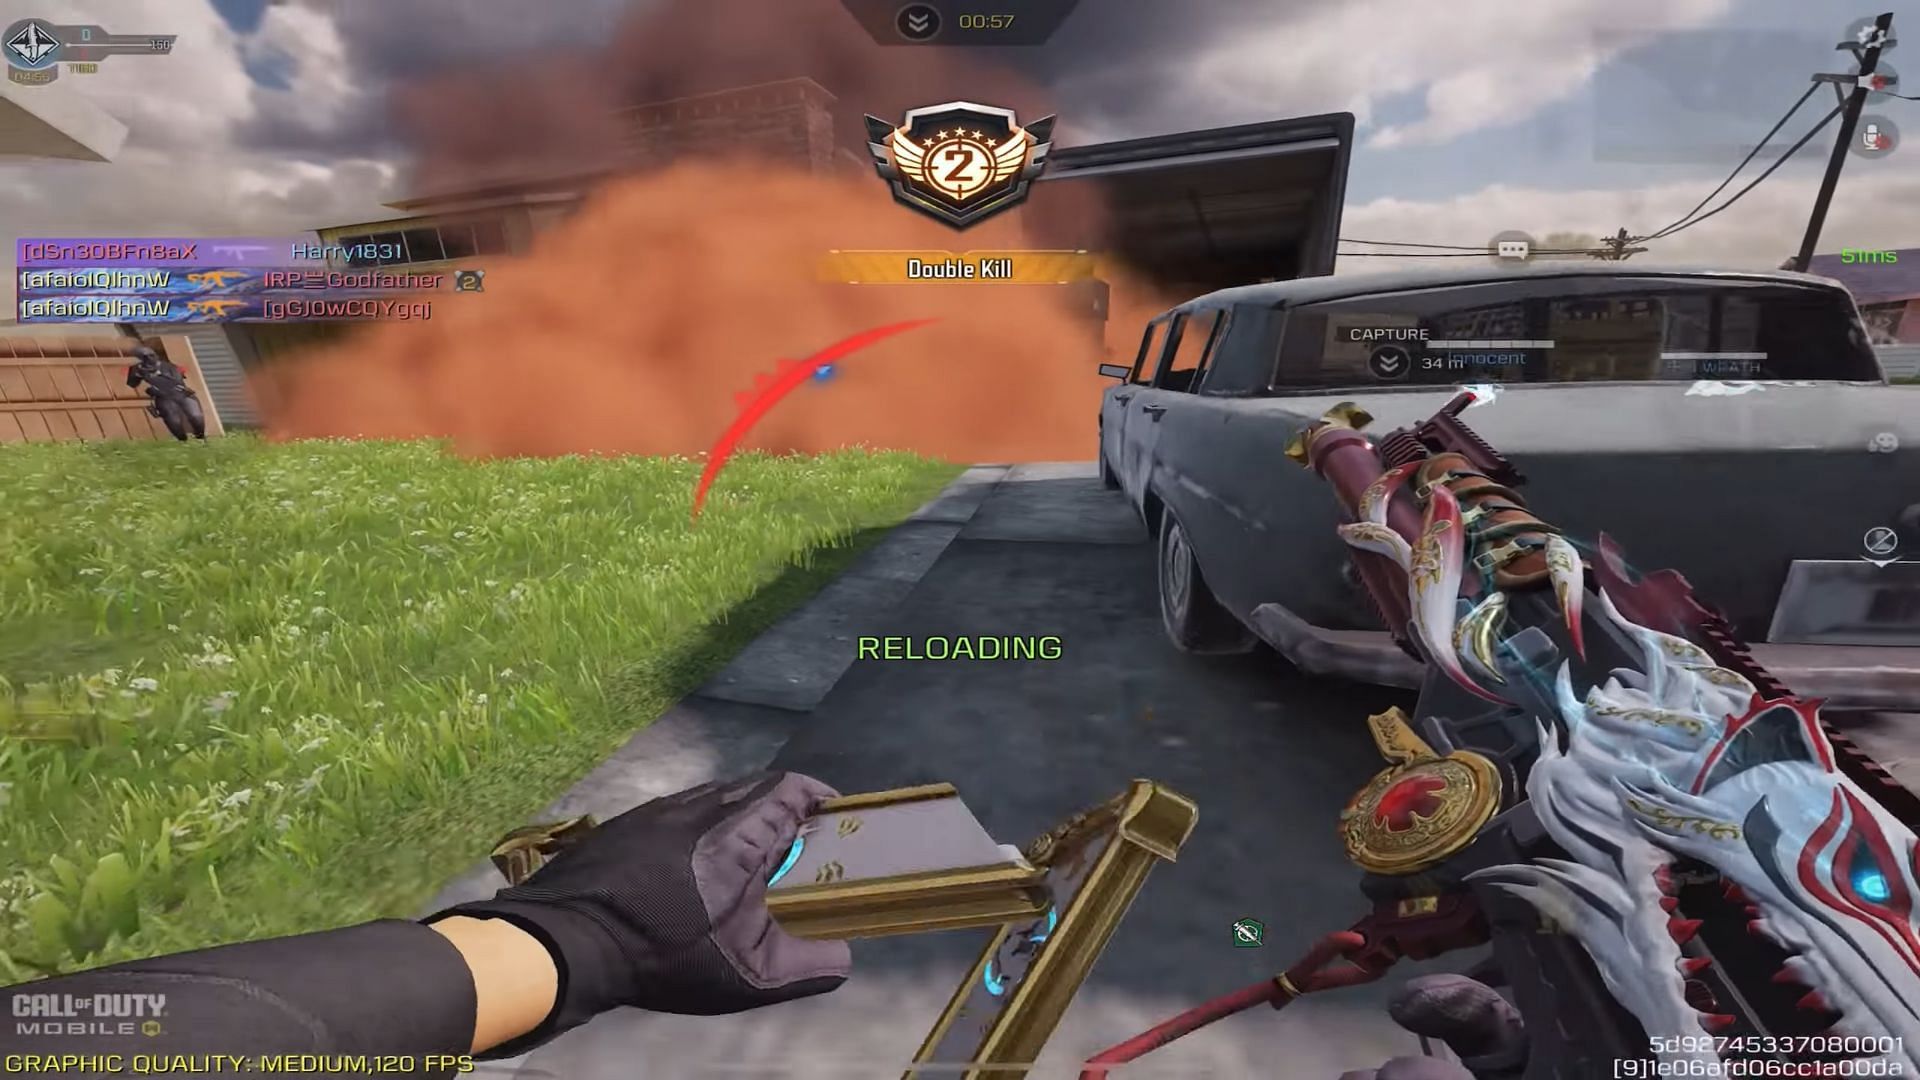 KN44 Assault rifle gameplay (Image via Strange One Gaming YT)